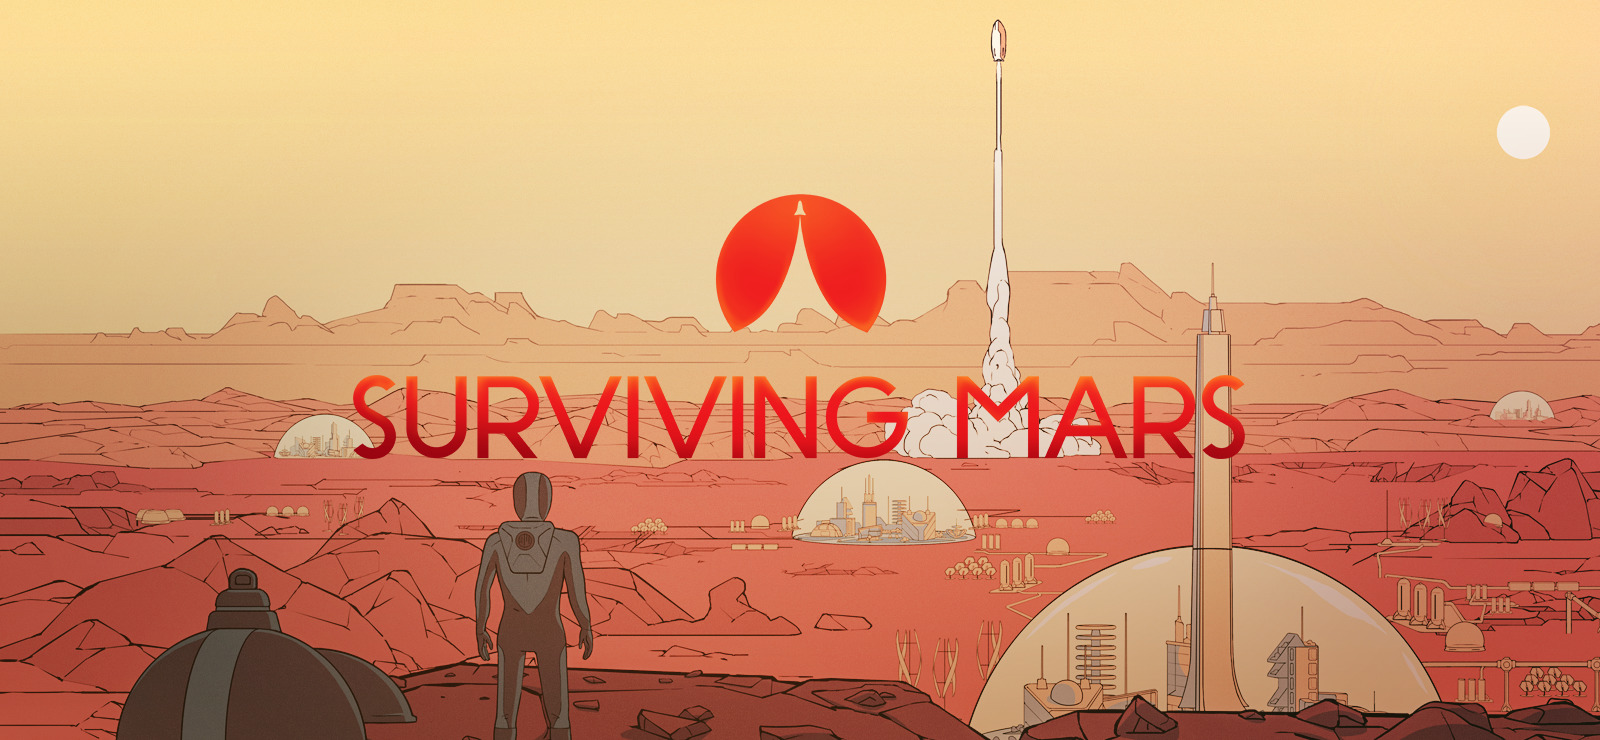 SURVIVING MARS, EPIC STORE’DA ÜCRETSİZ!